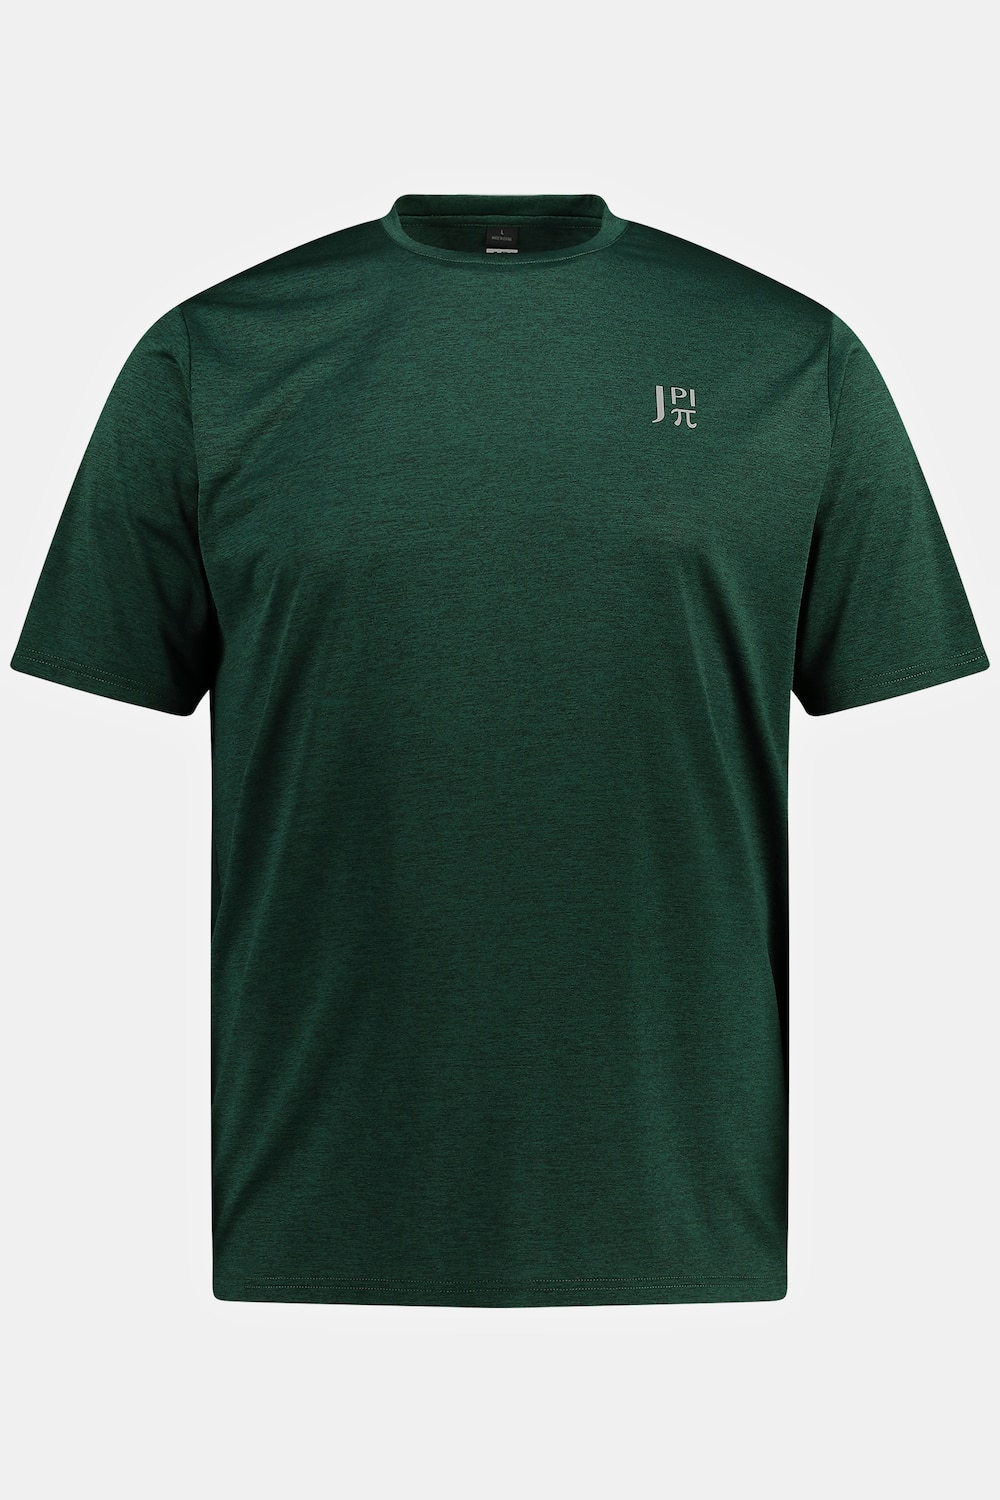 Grote Maten JAY-PI functioneel shirt FLEXNAMIC®male, groen, Maat: 7XL, Polyester, JAY-PI